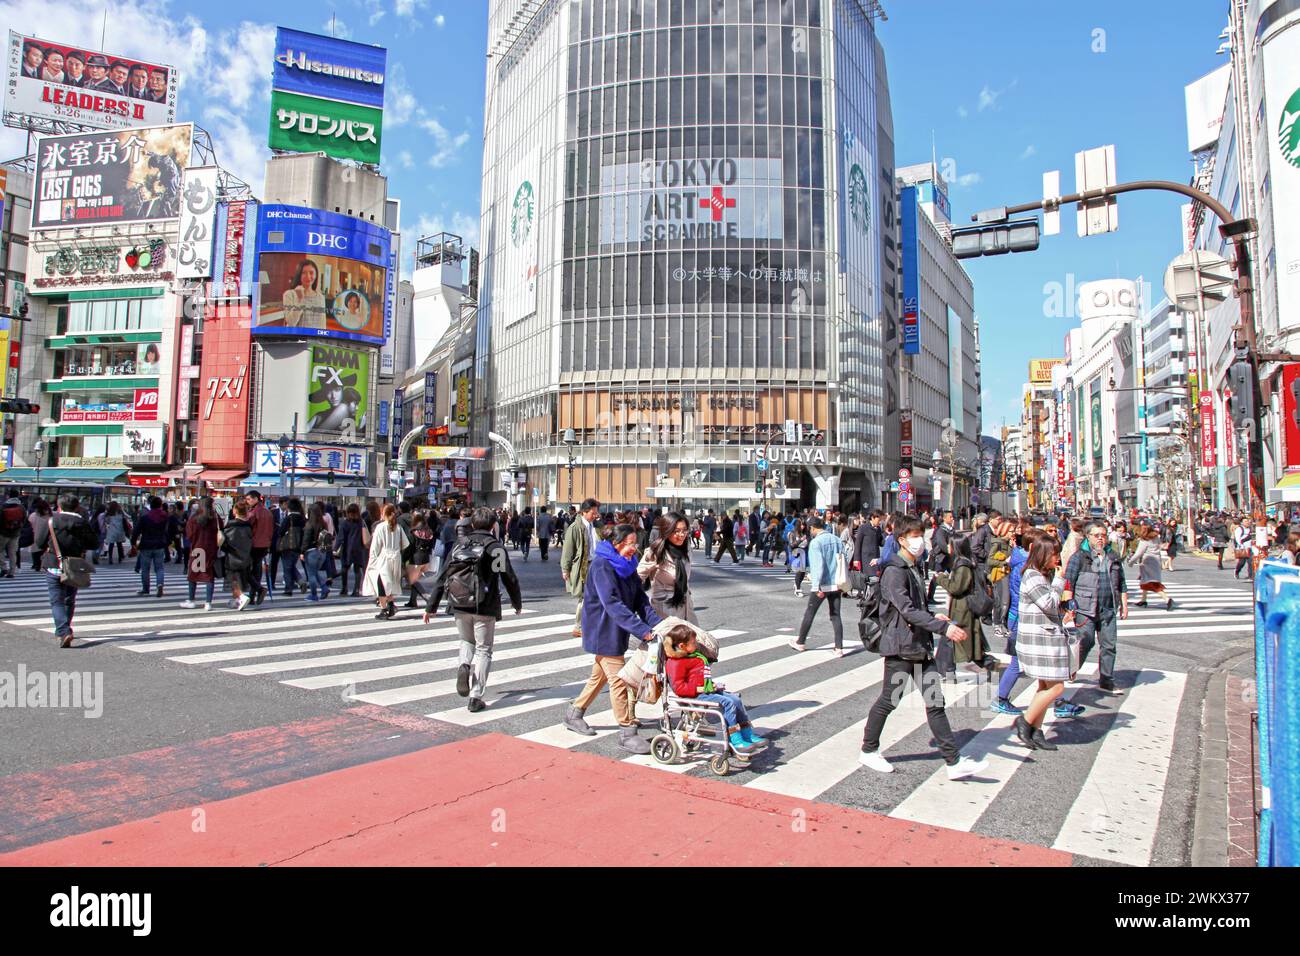 The Shibuya Intersection or Shibuya Crossing in Tokyo, Japan. Stock Photo